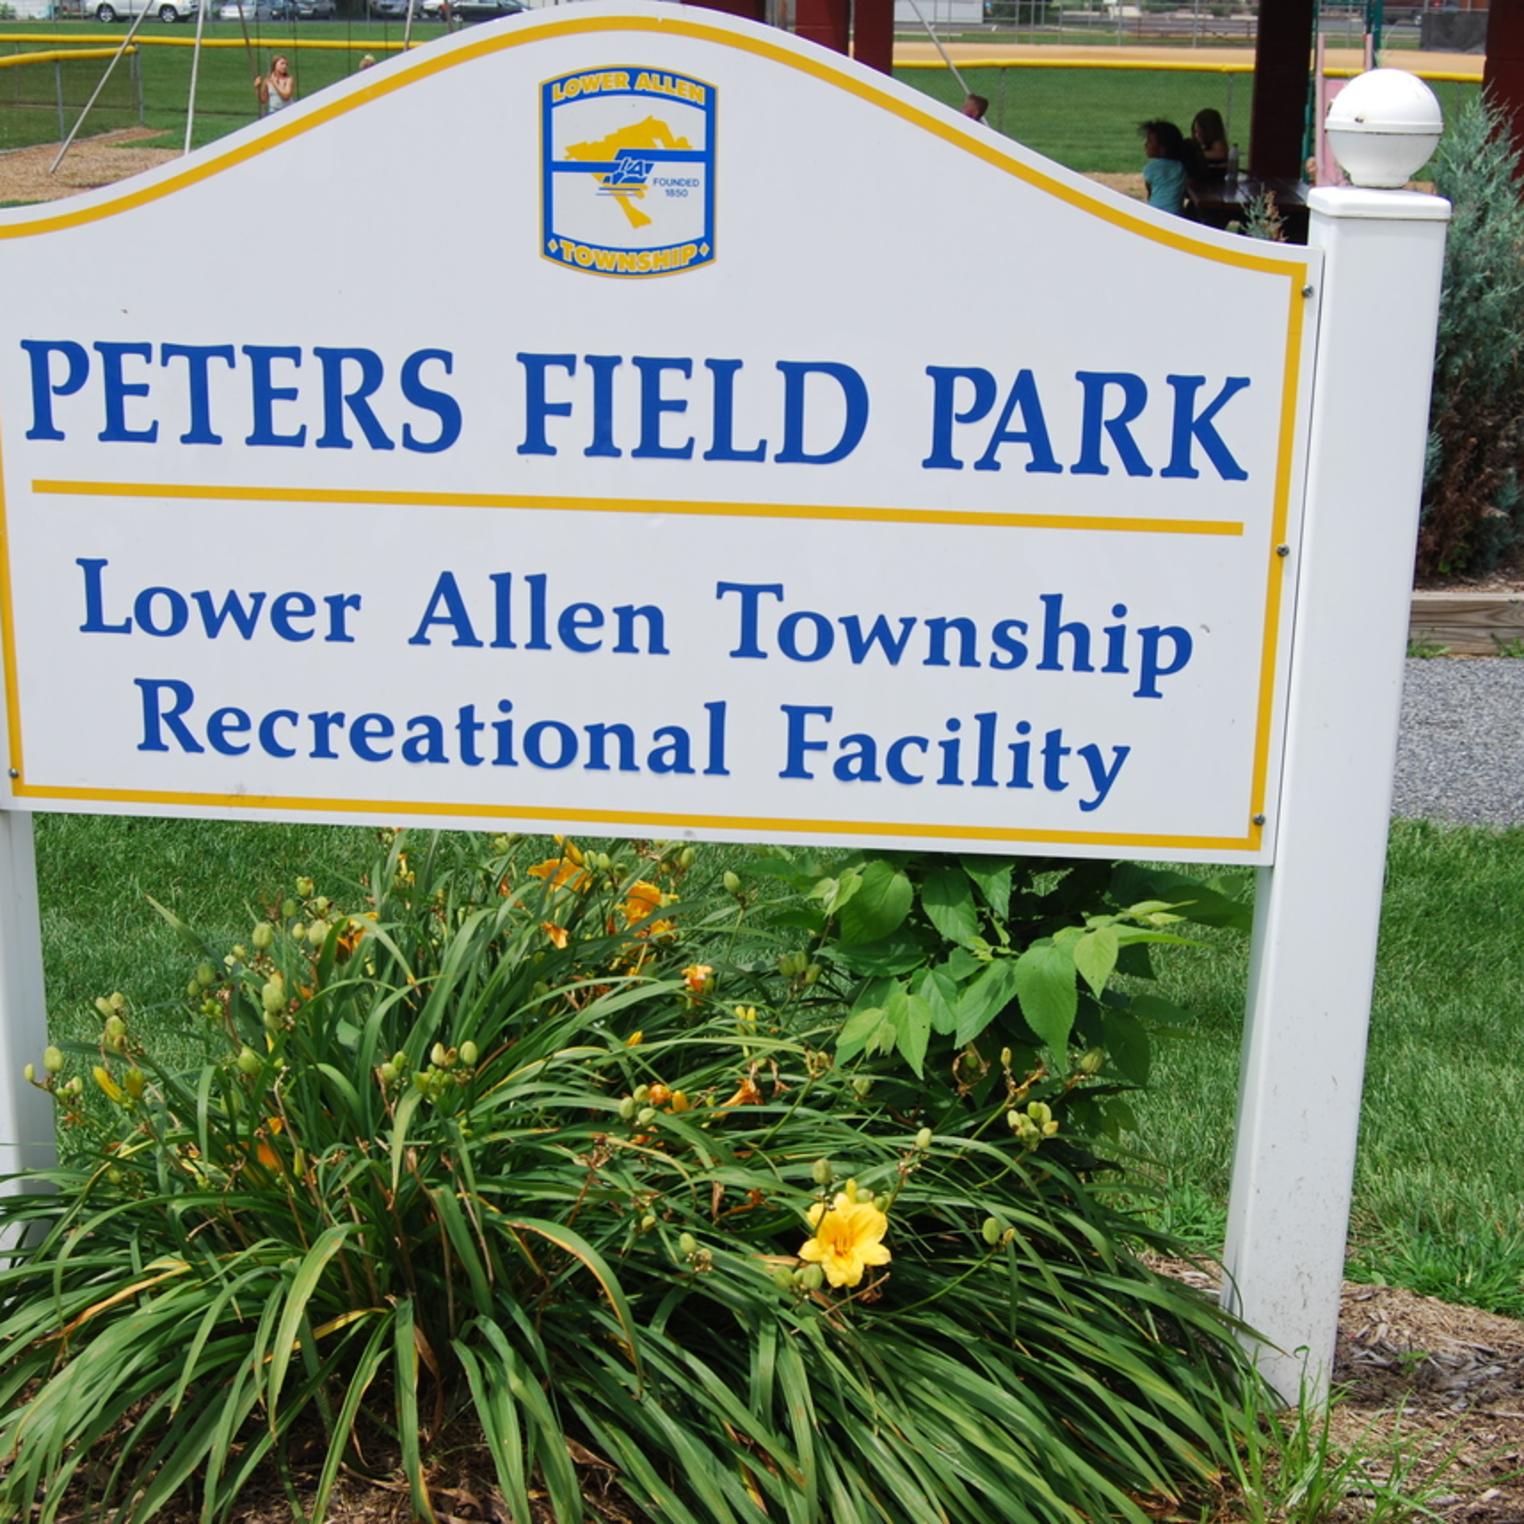 Peter's Field Park